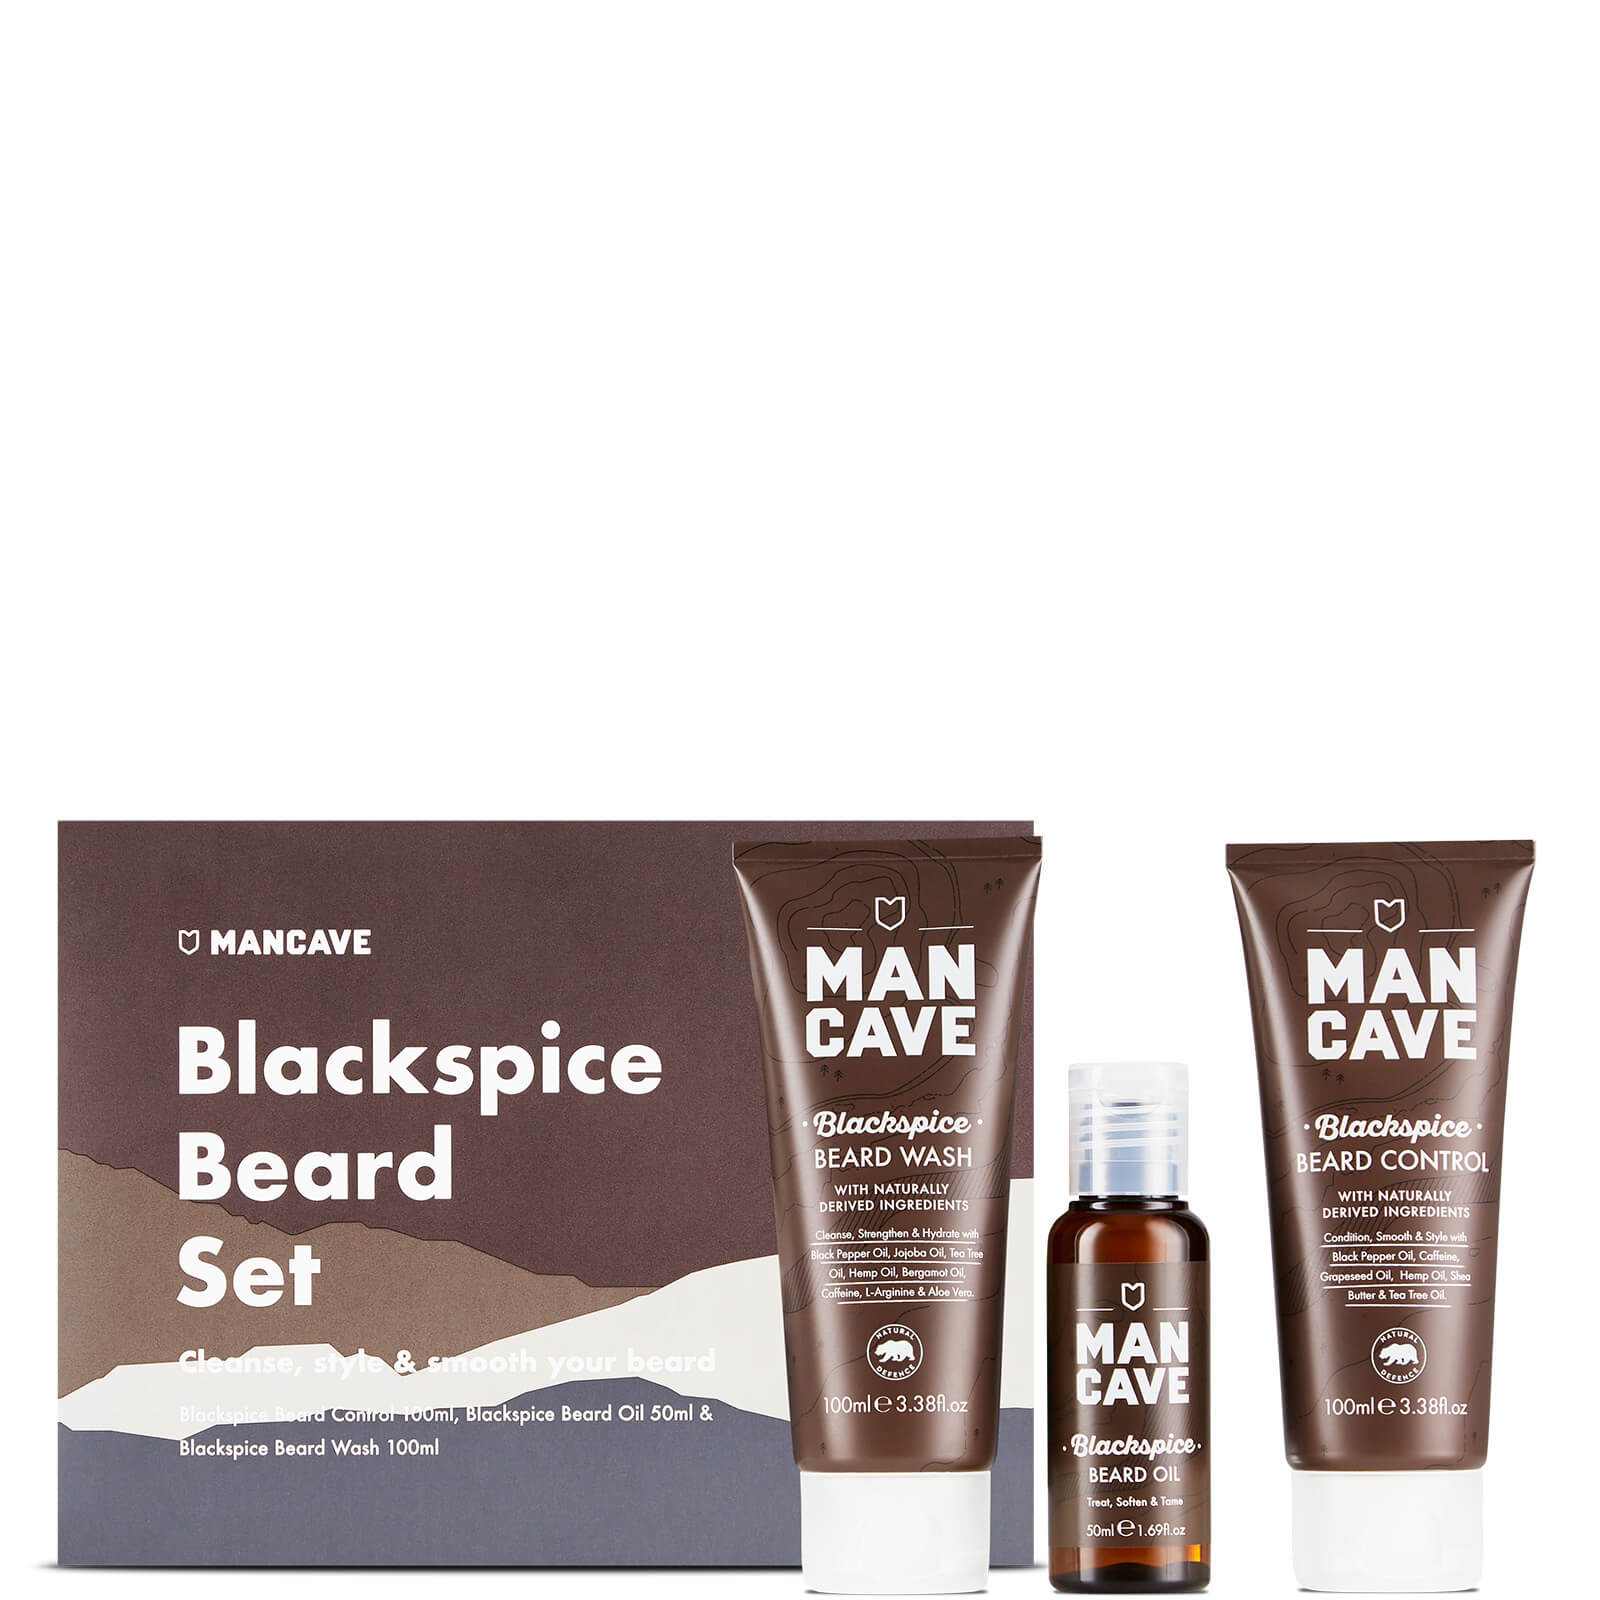 ManCave Blackspice Beard Care – 3 Piece Gift Set lookfantastic.com imagine